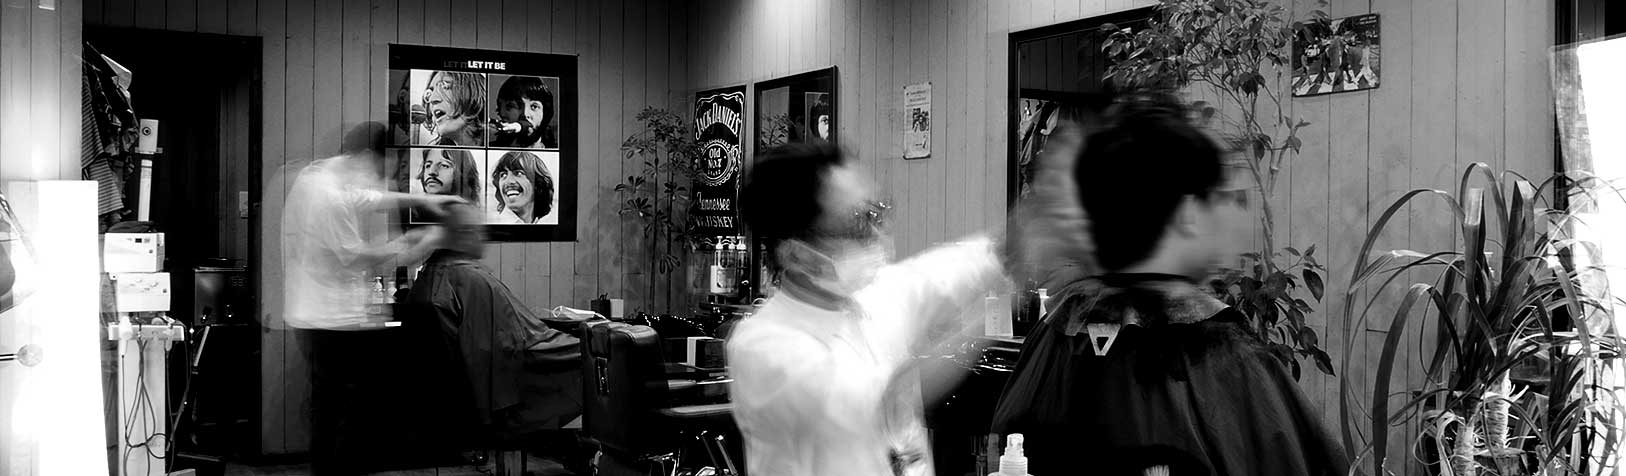 ビートルバム Beetle Bum 北海道釧路市の理容室 理髪店 床屋